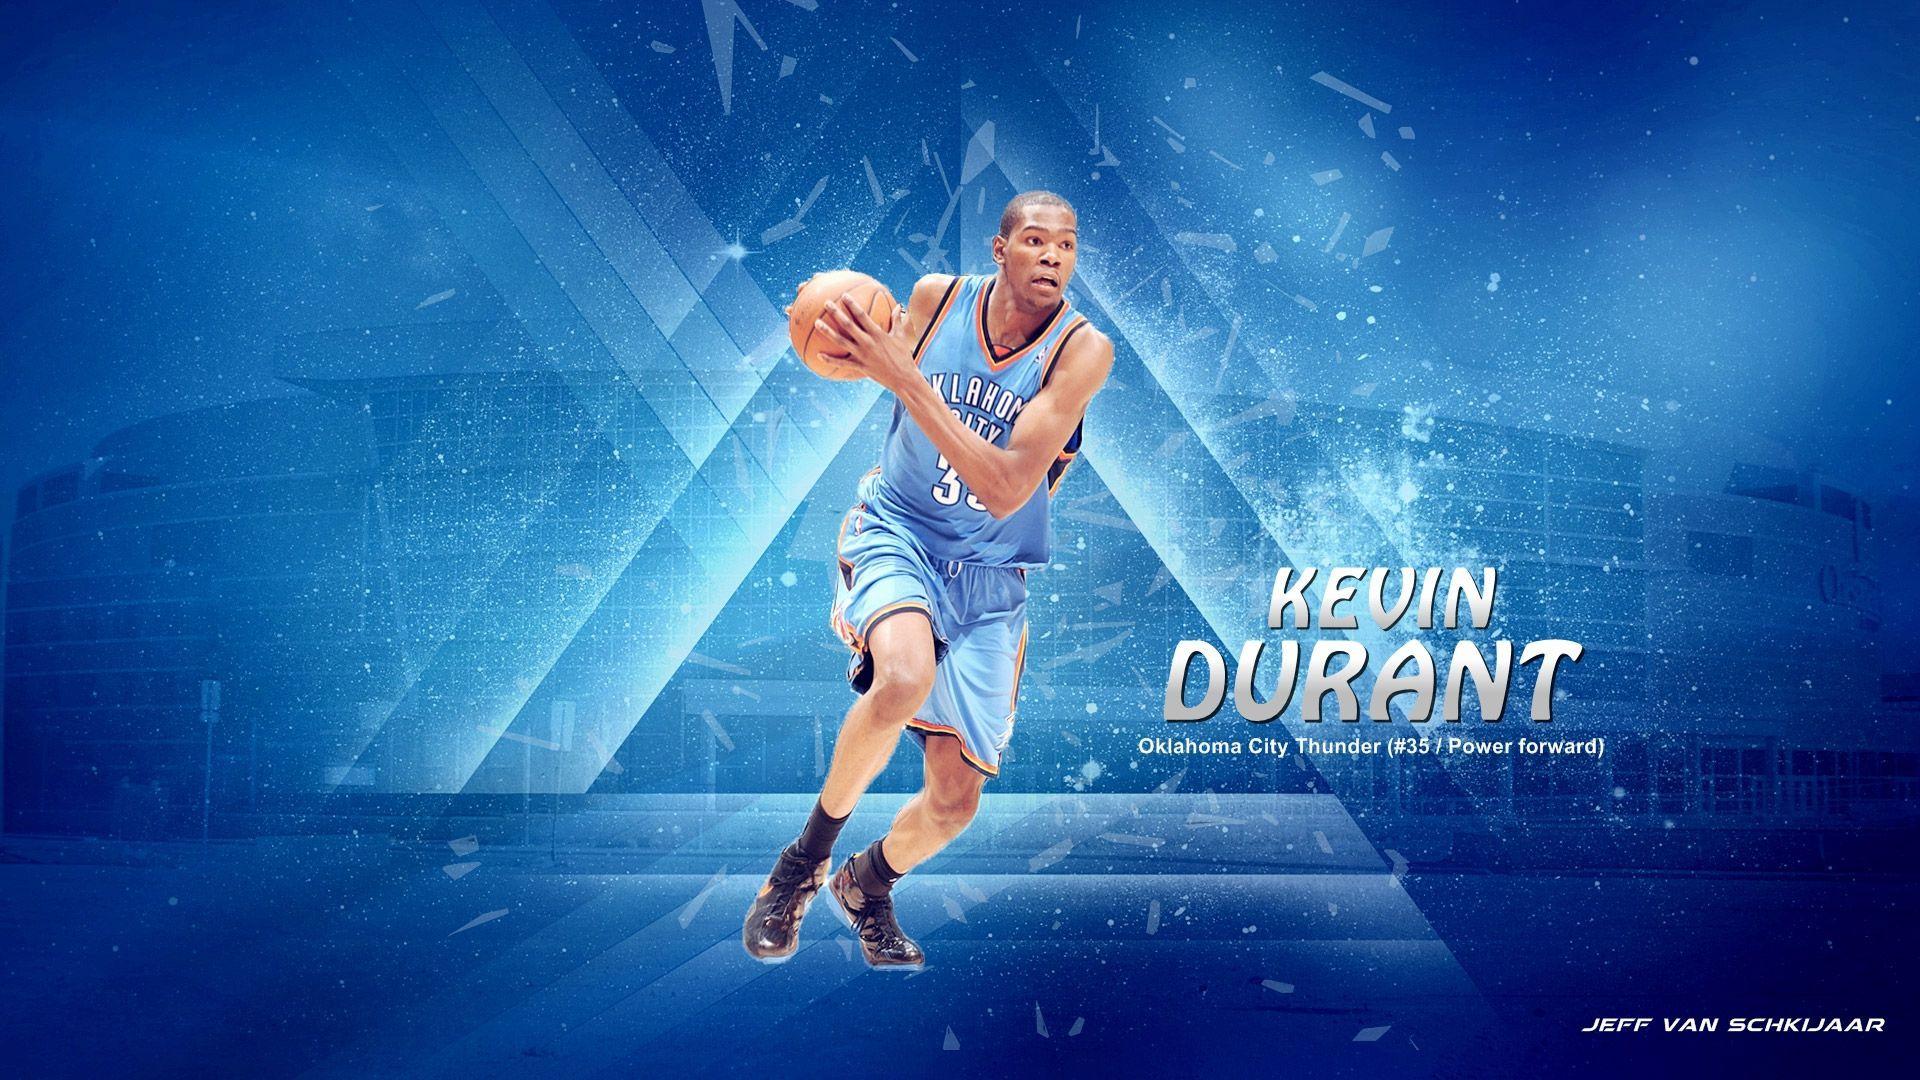 Kevin Durant OKC Thunder 2014 Wallpaper. Basketball Wallpaper at